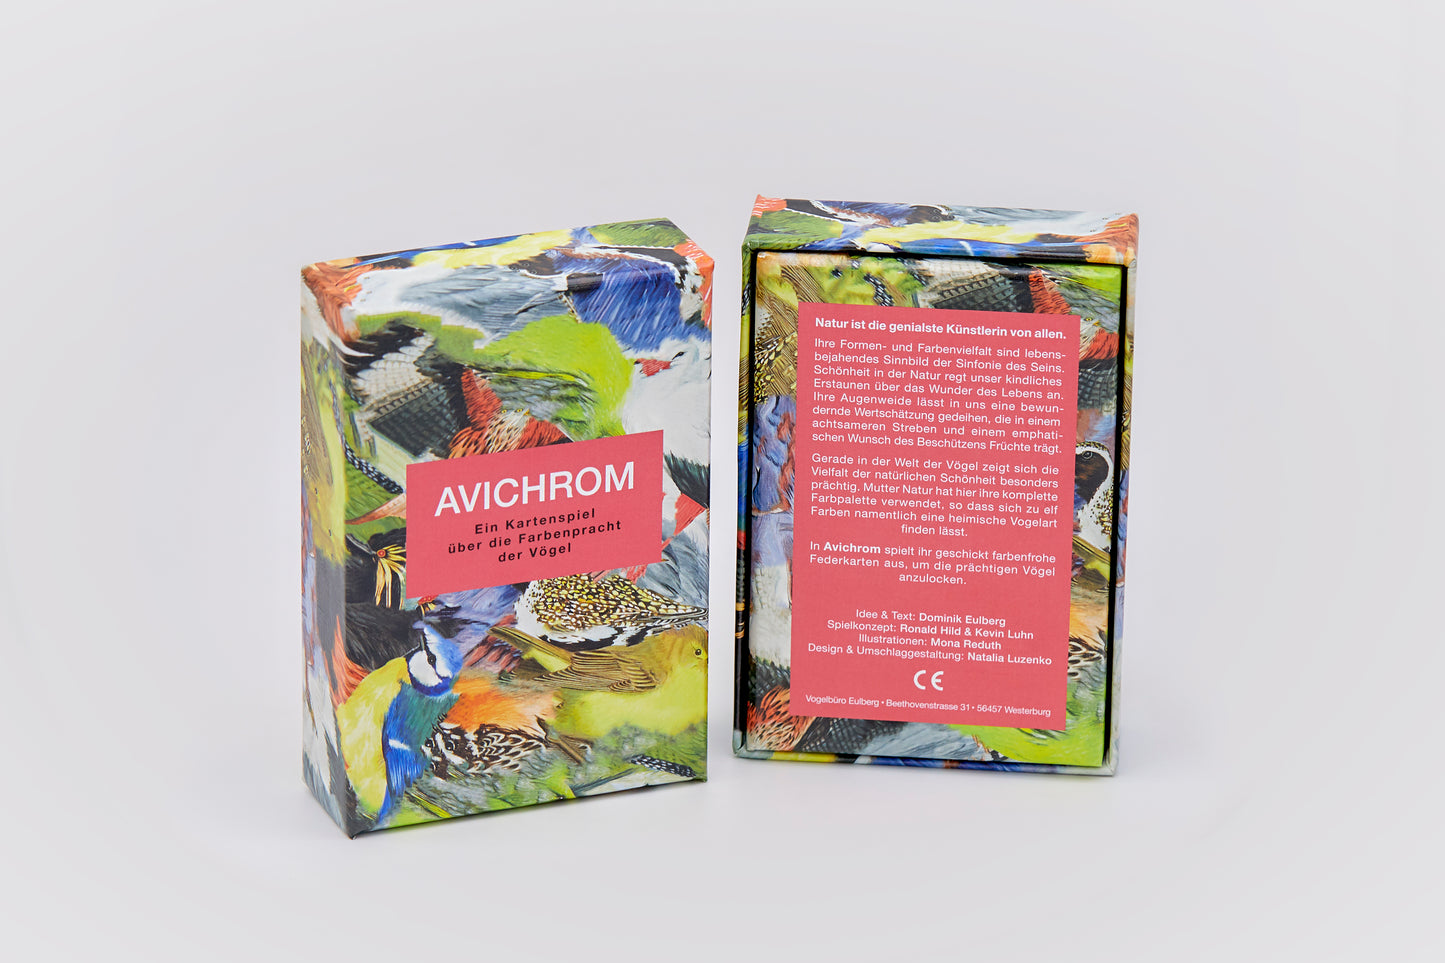 AVICHROM - Kartenspiel / Card game